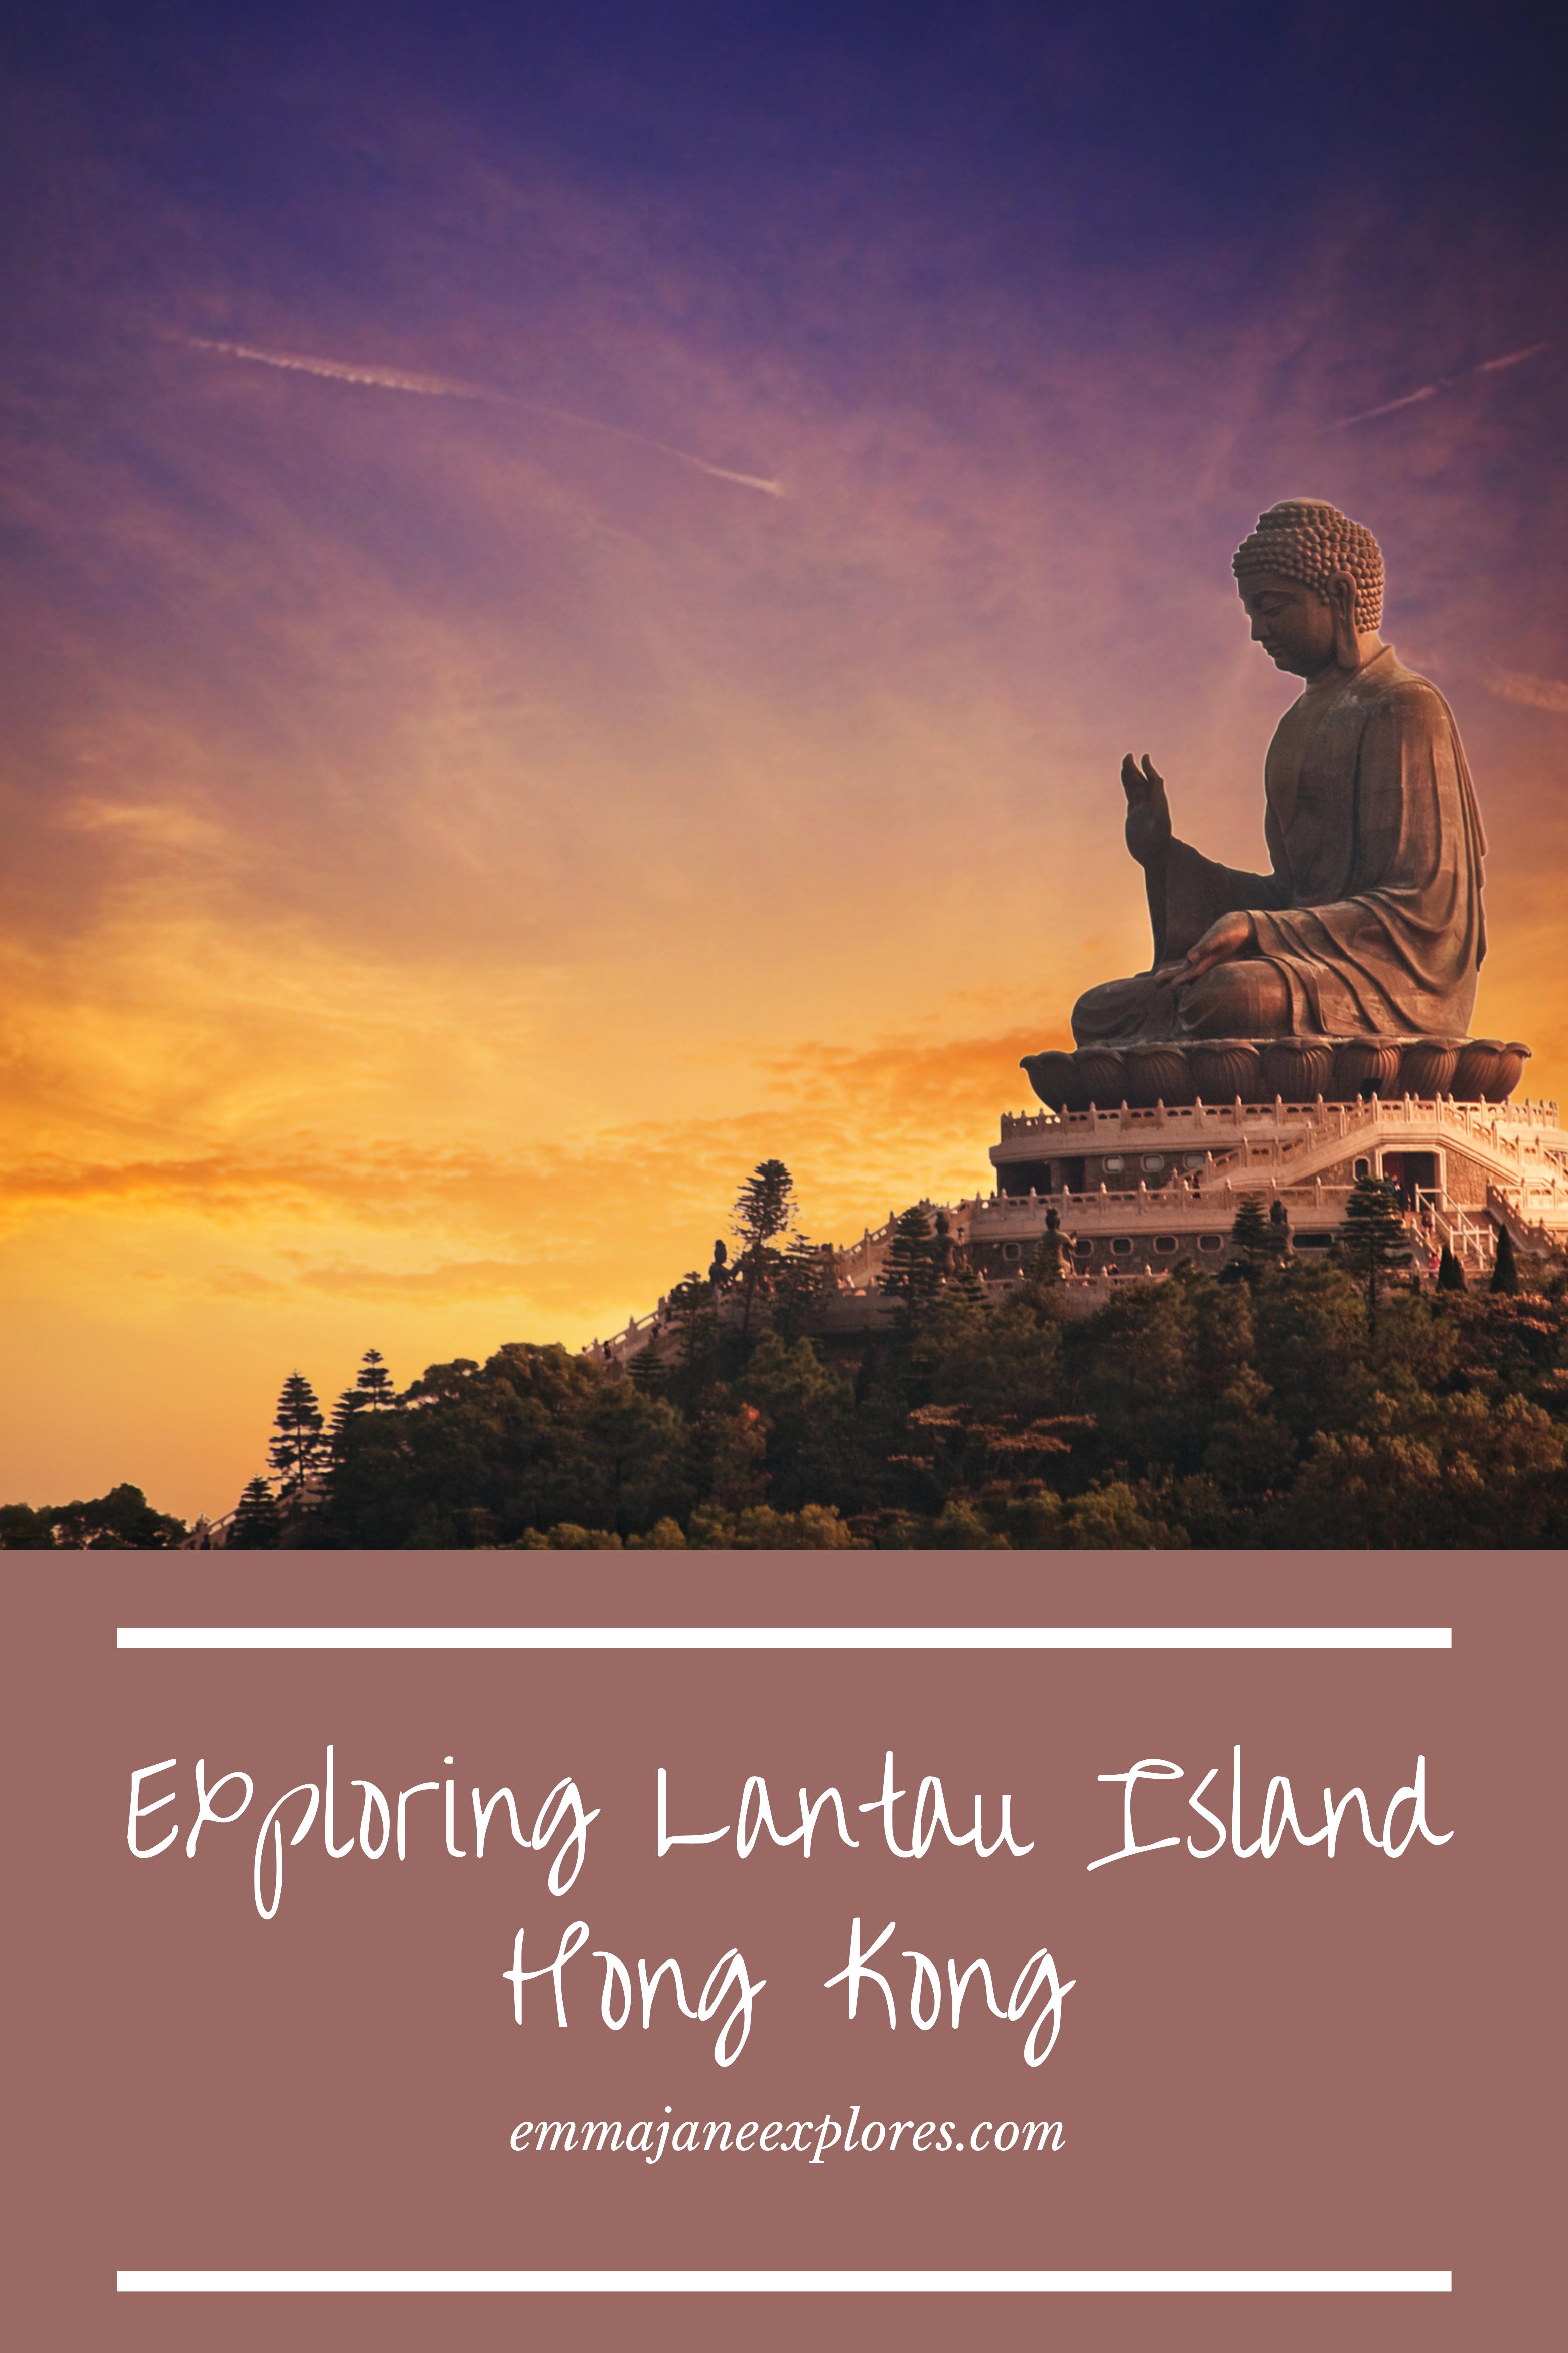 A Day Trip to Lantau Island: The Big Buddha to Tai O Fishing Village - Emma Jane Explores